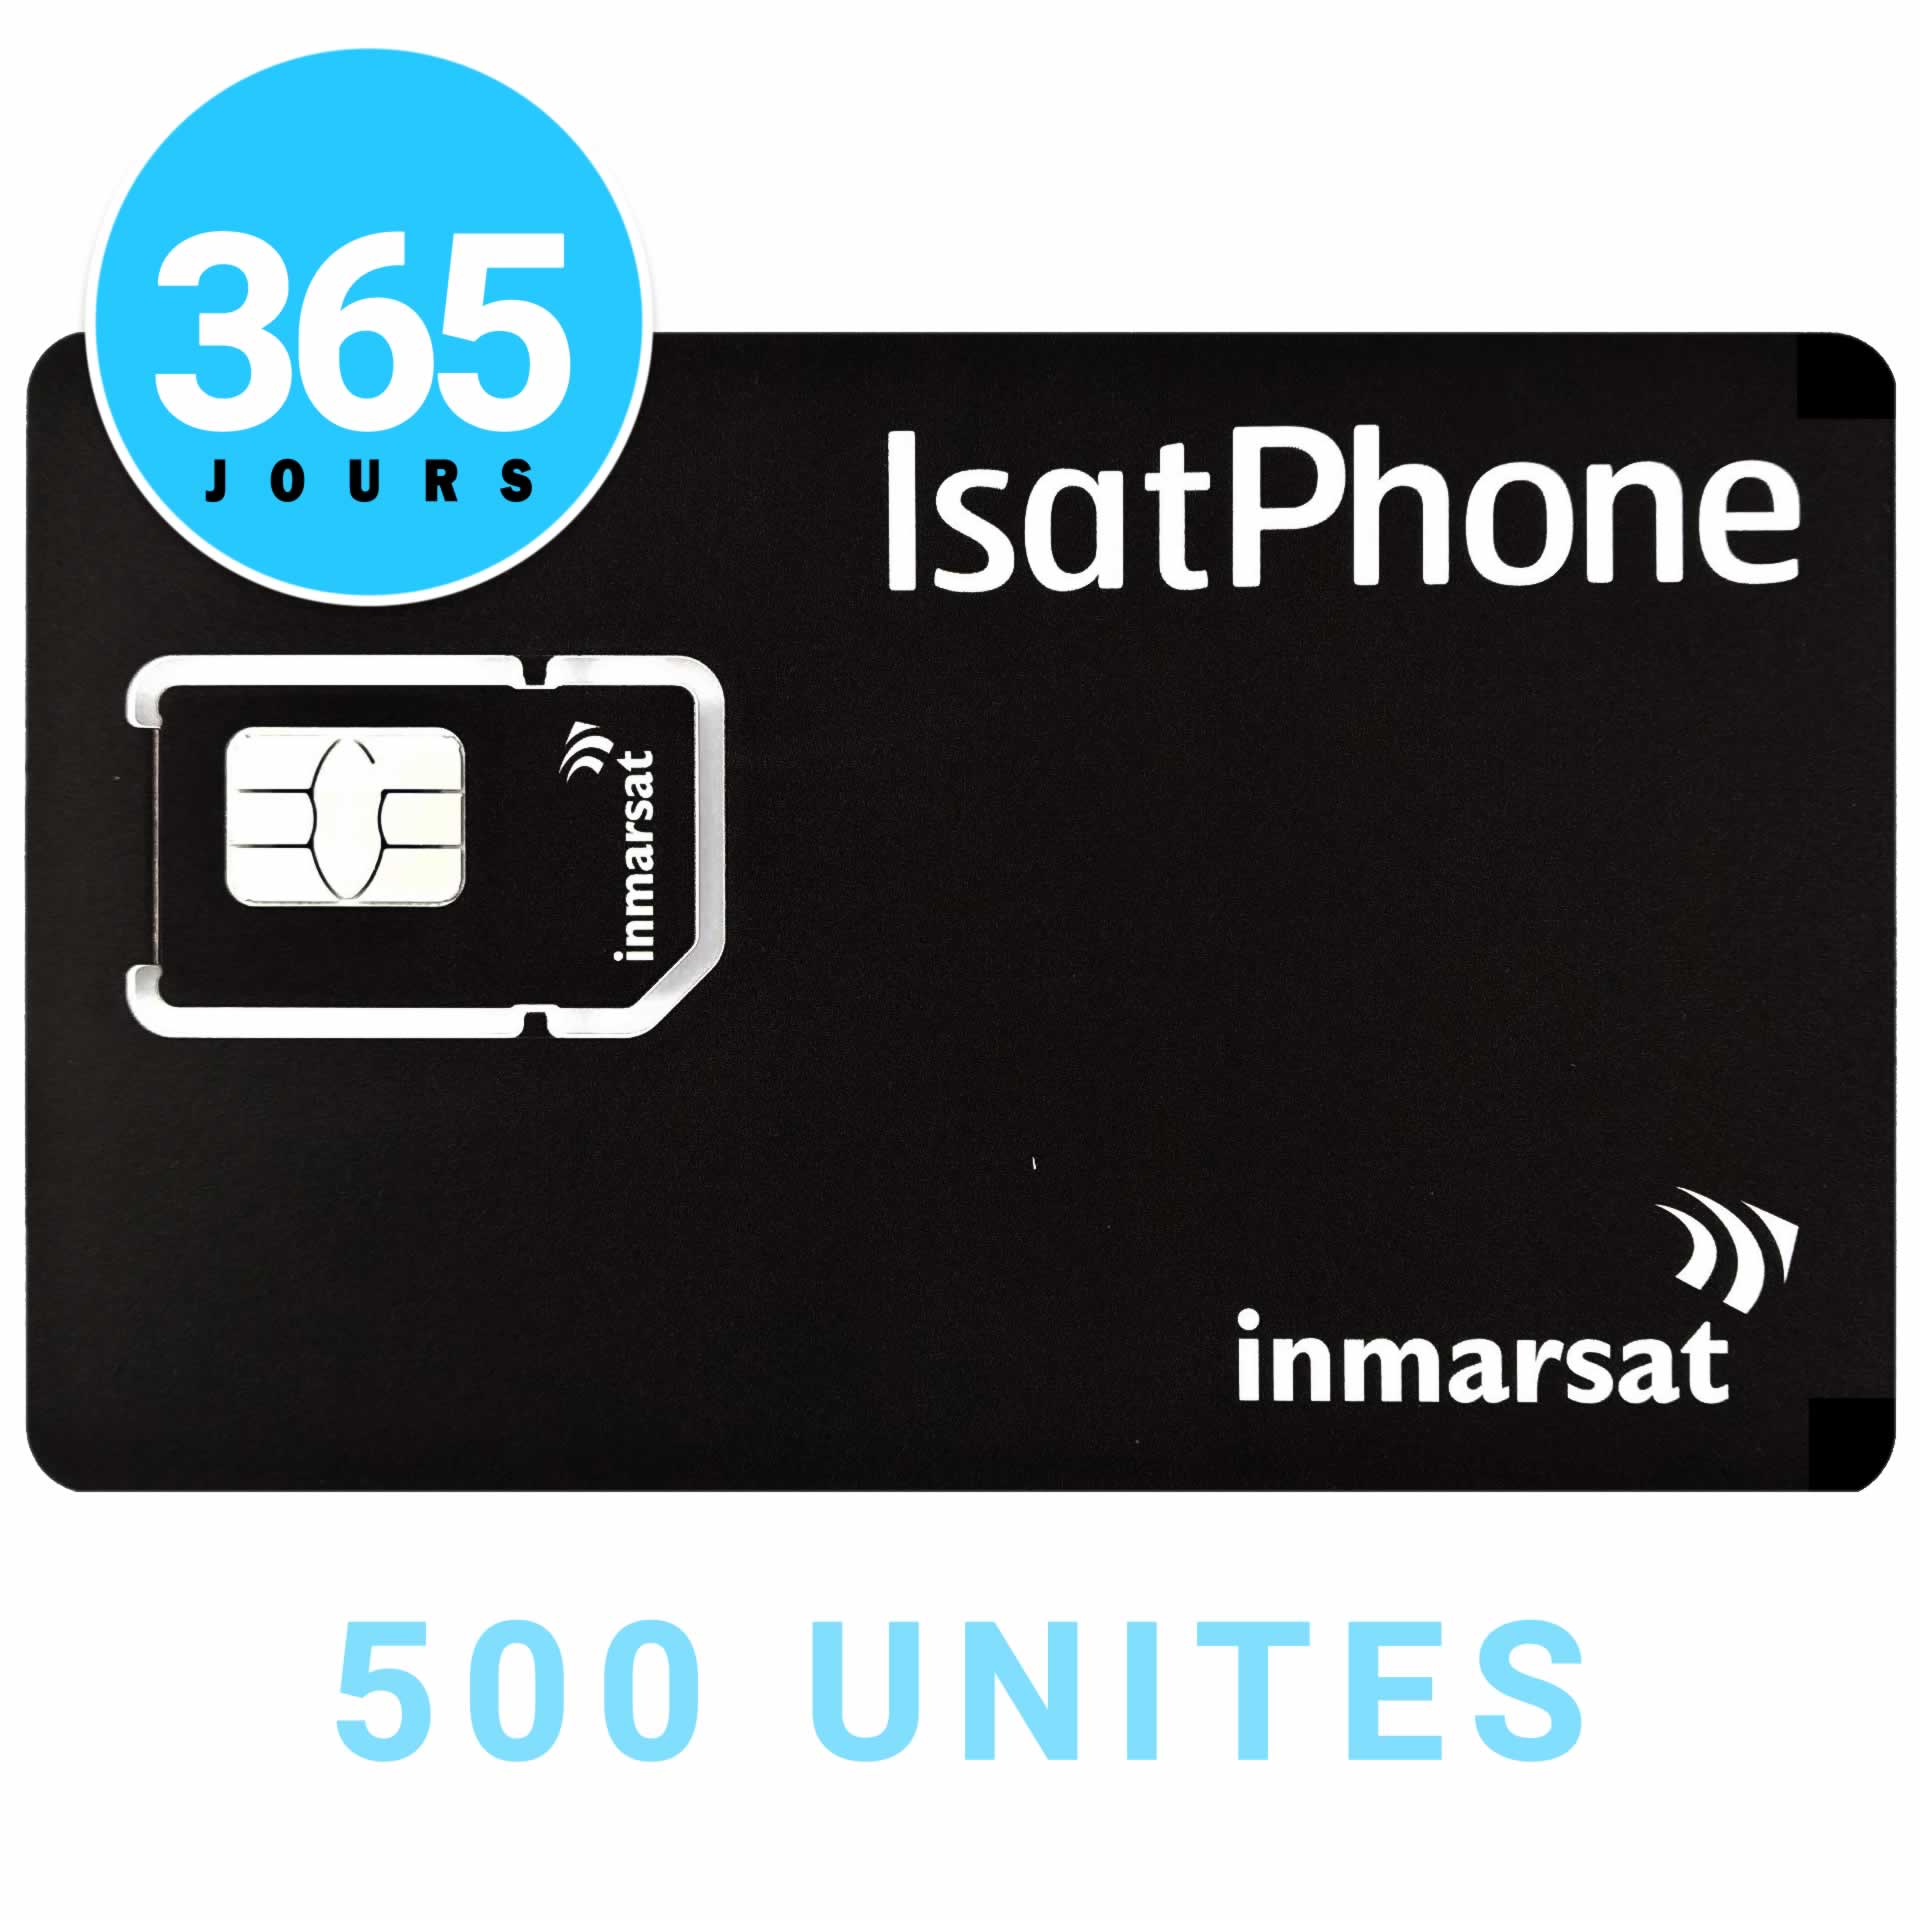 INMARSAT Rechargeable ISATPHONE Prepaid Card - 500 UNITS - 365 DAYS